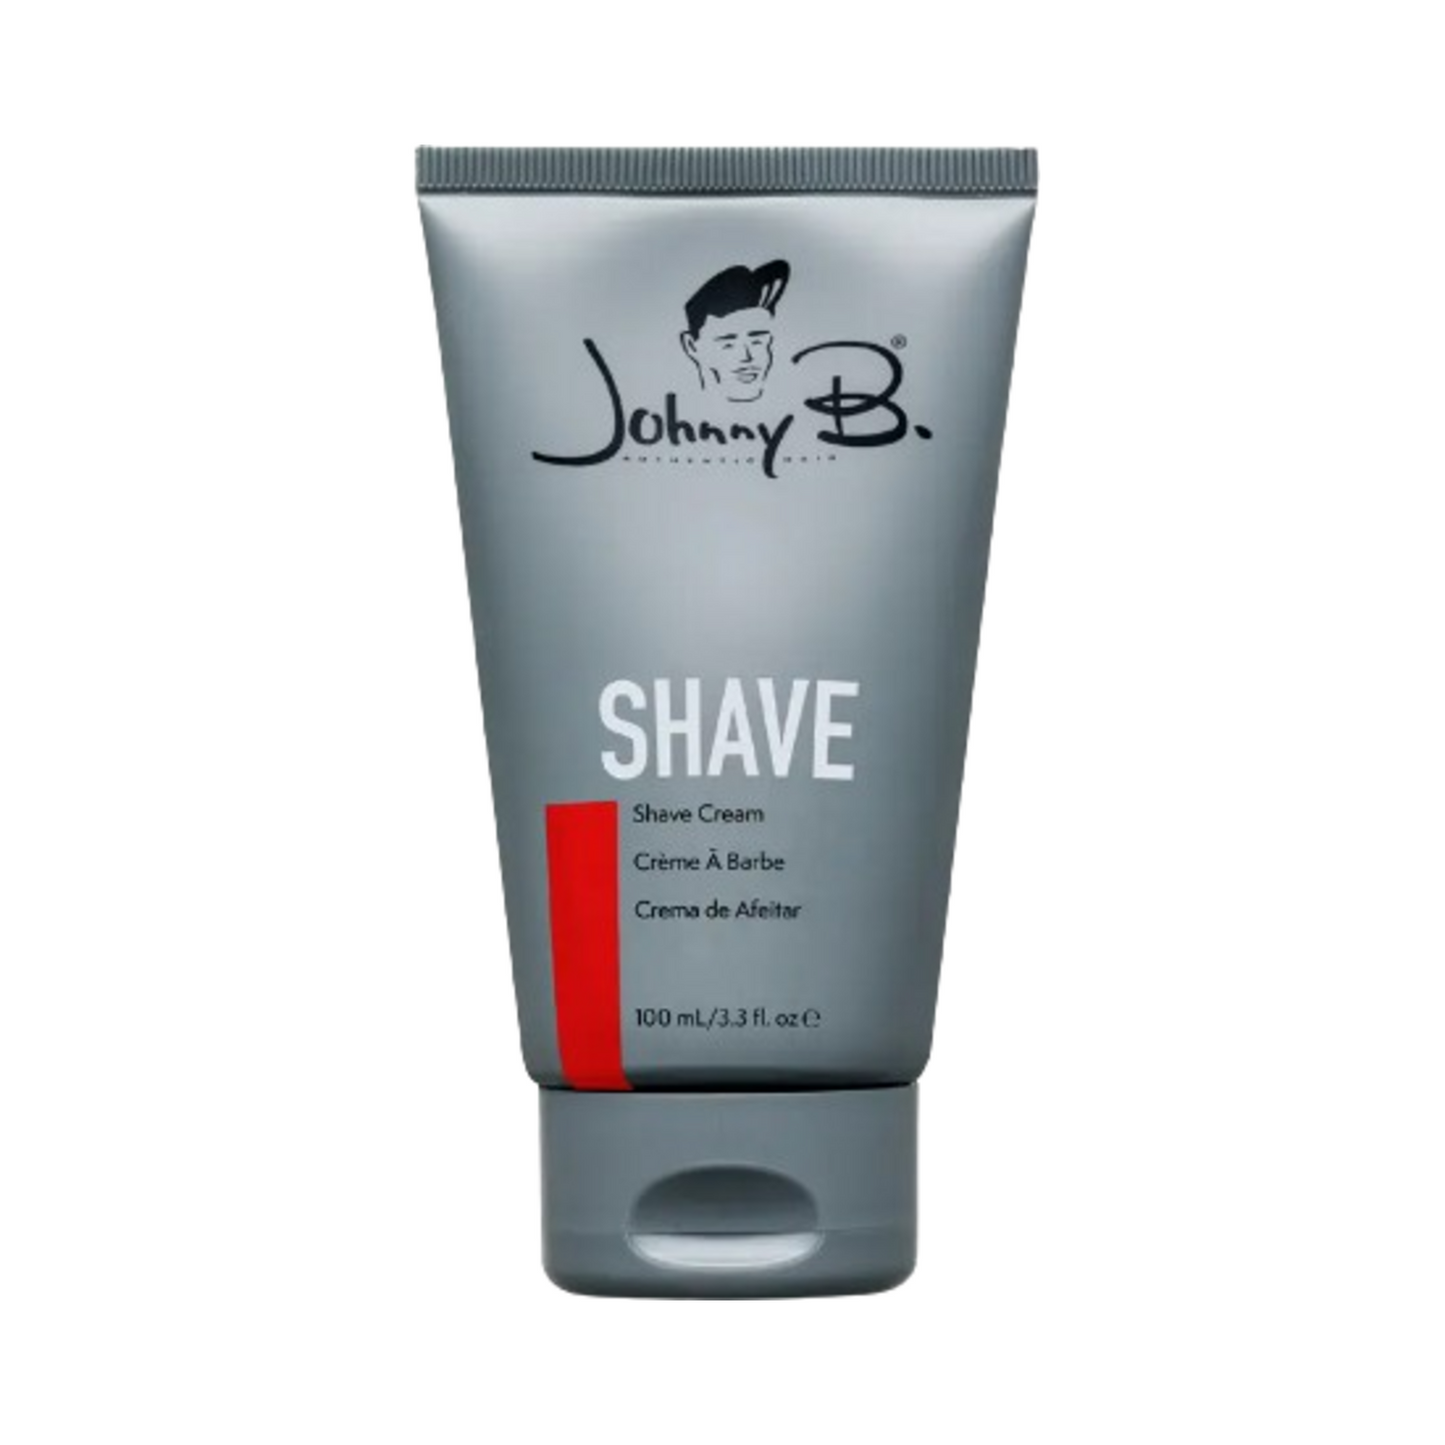 Johnny B. Shave Cream Tube